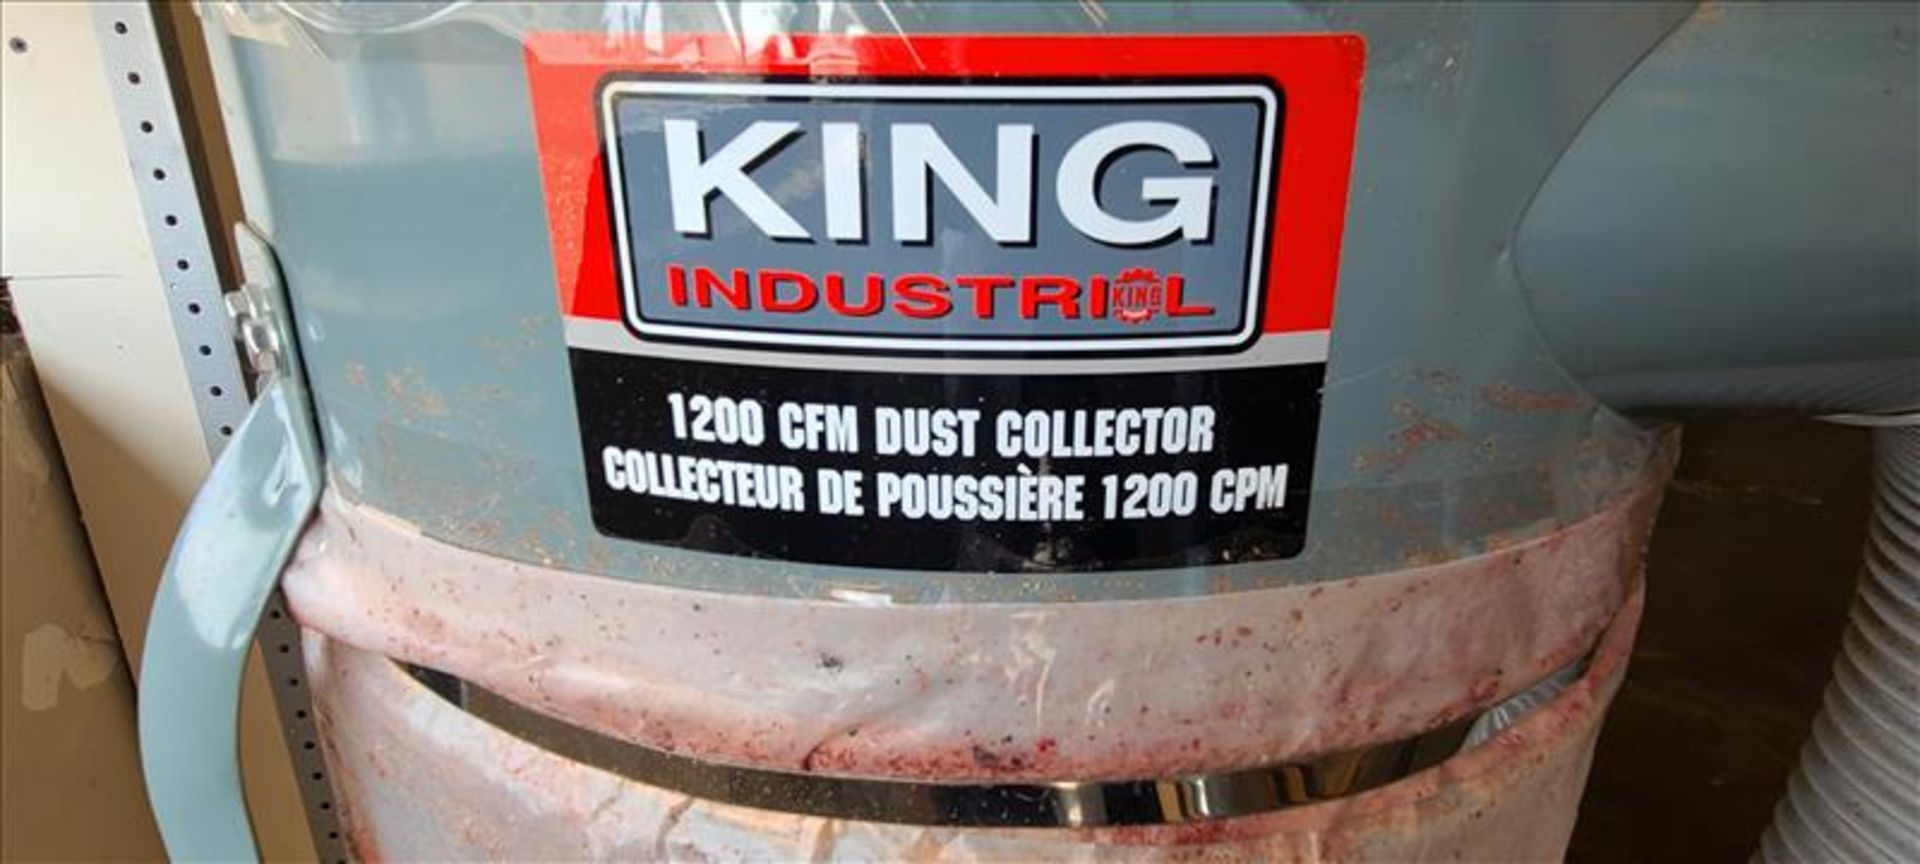 King Industrial 1200 CFM Dust Collector, model KC-3105C - Image 2 of 3